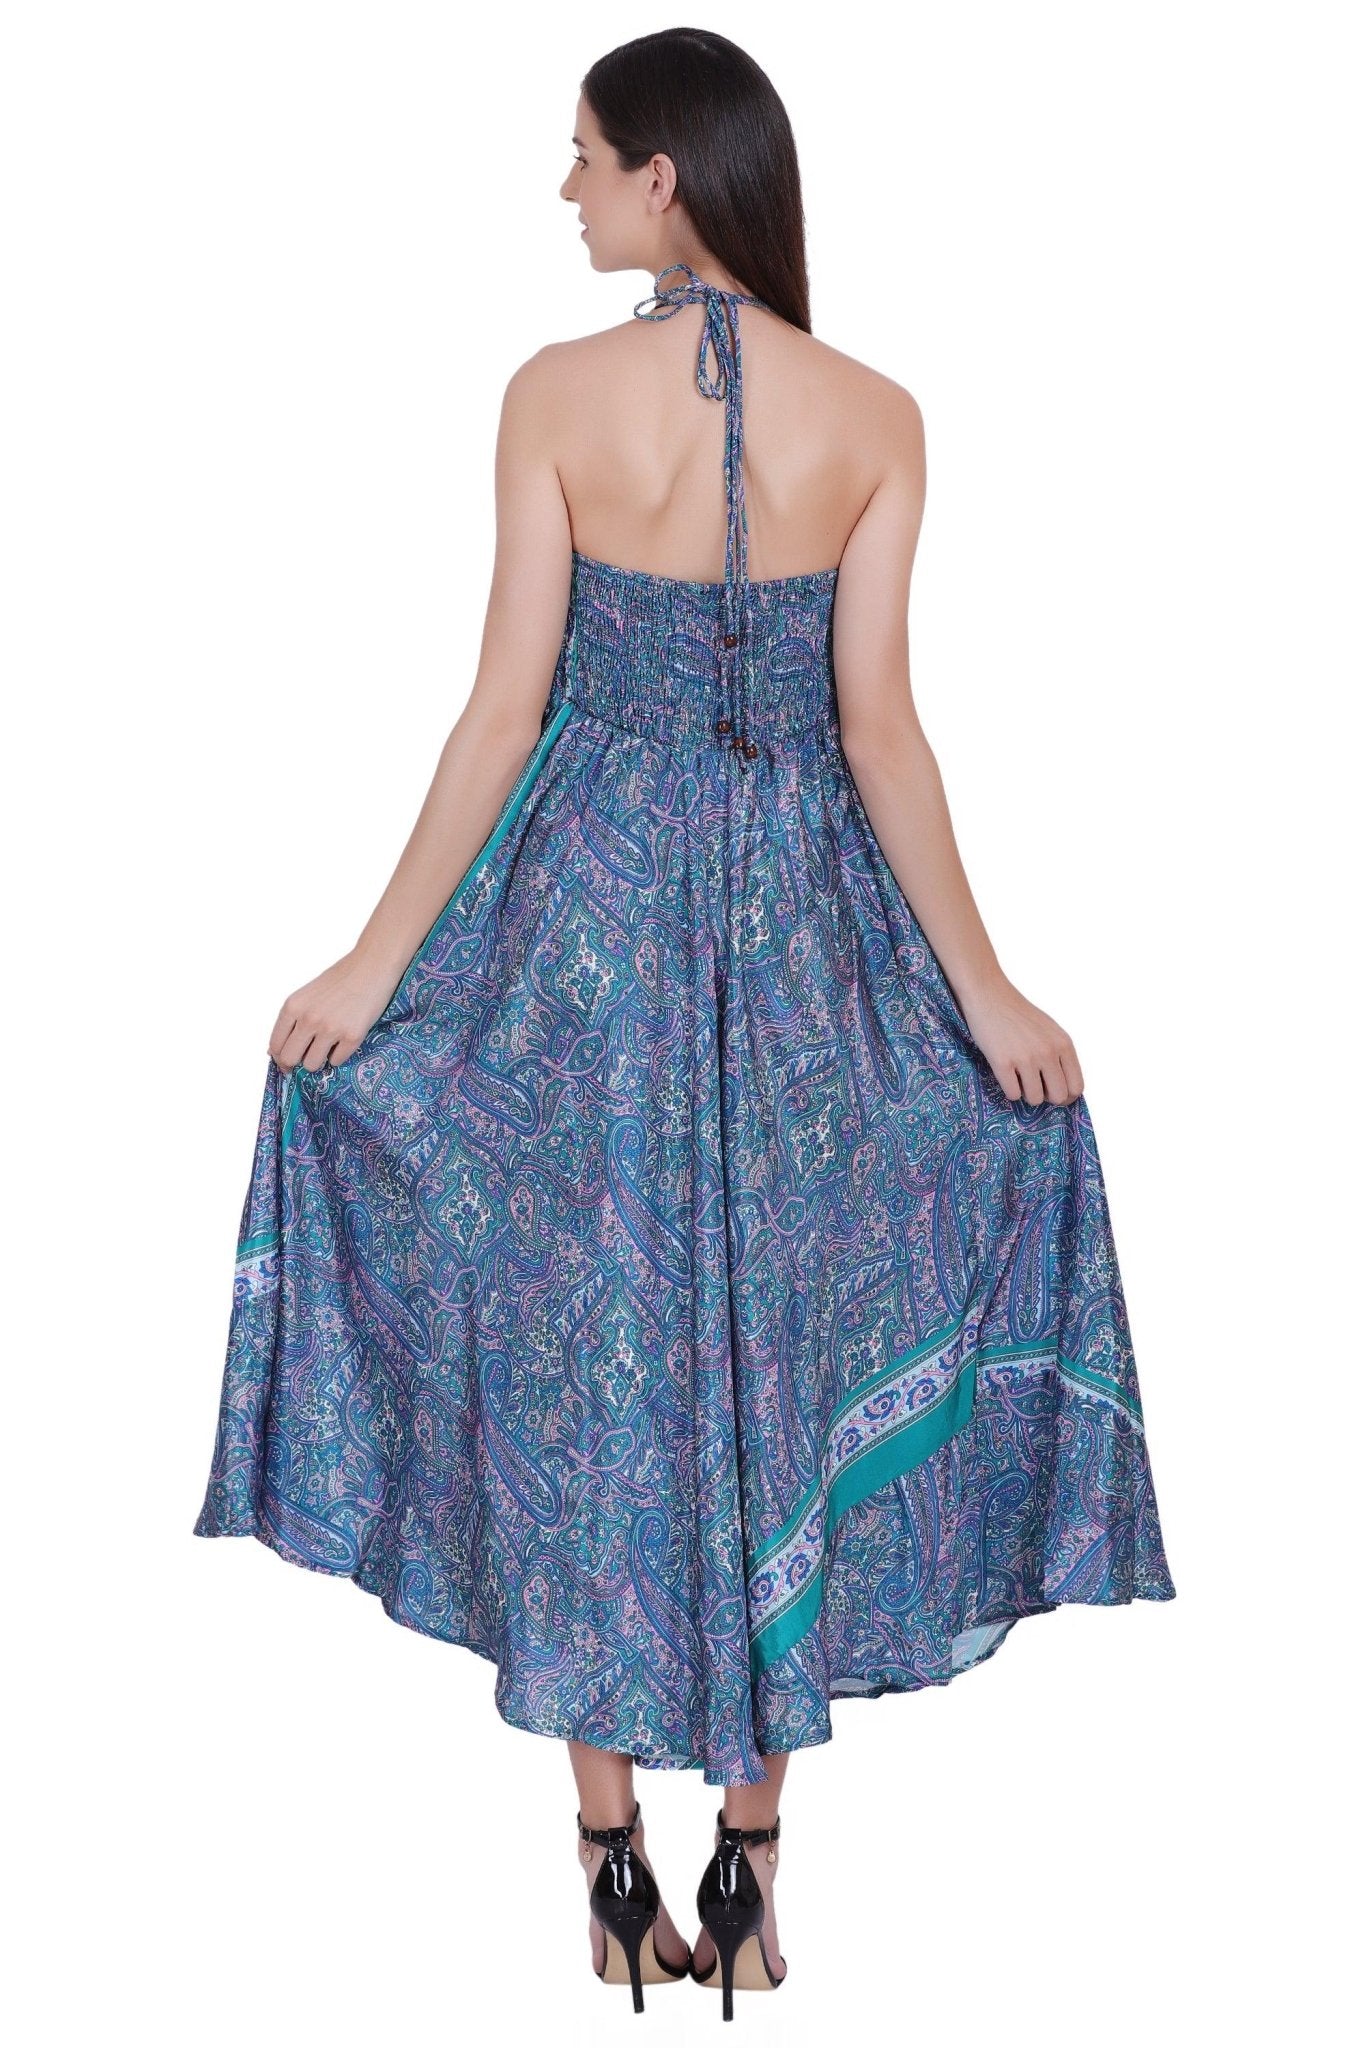 Paisley Printed Silk Dress AB23001 - Advance Apparels Inc